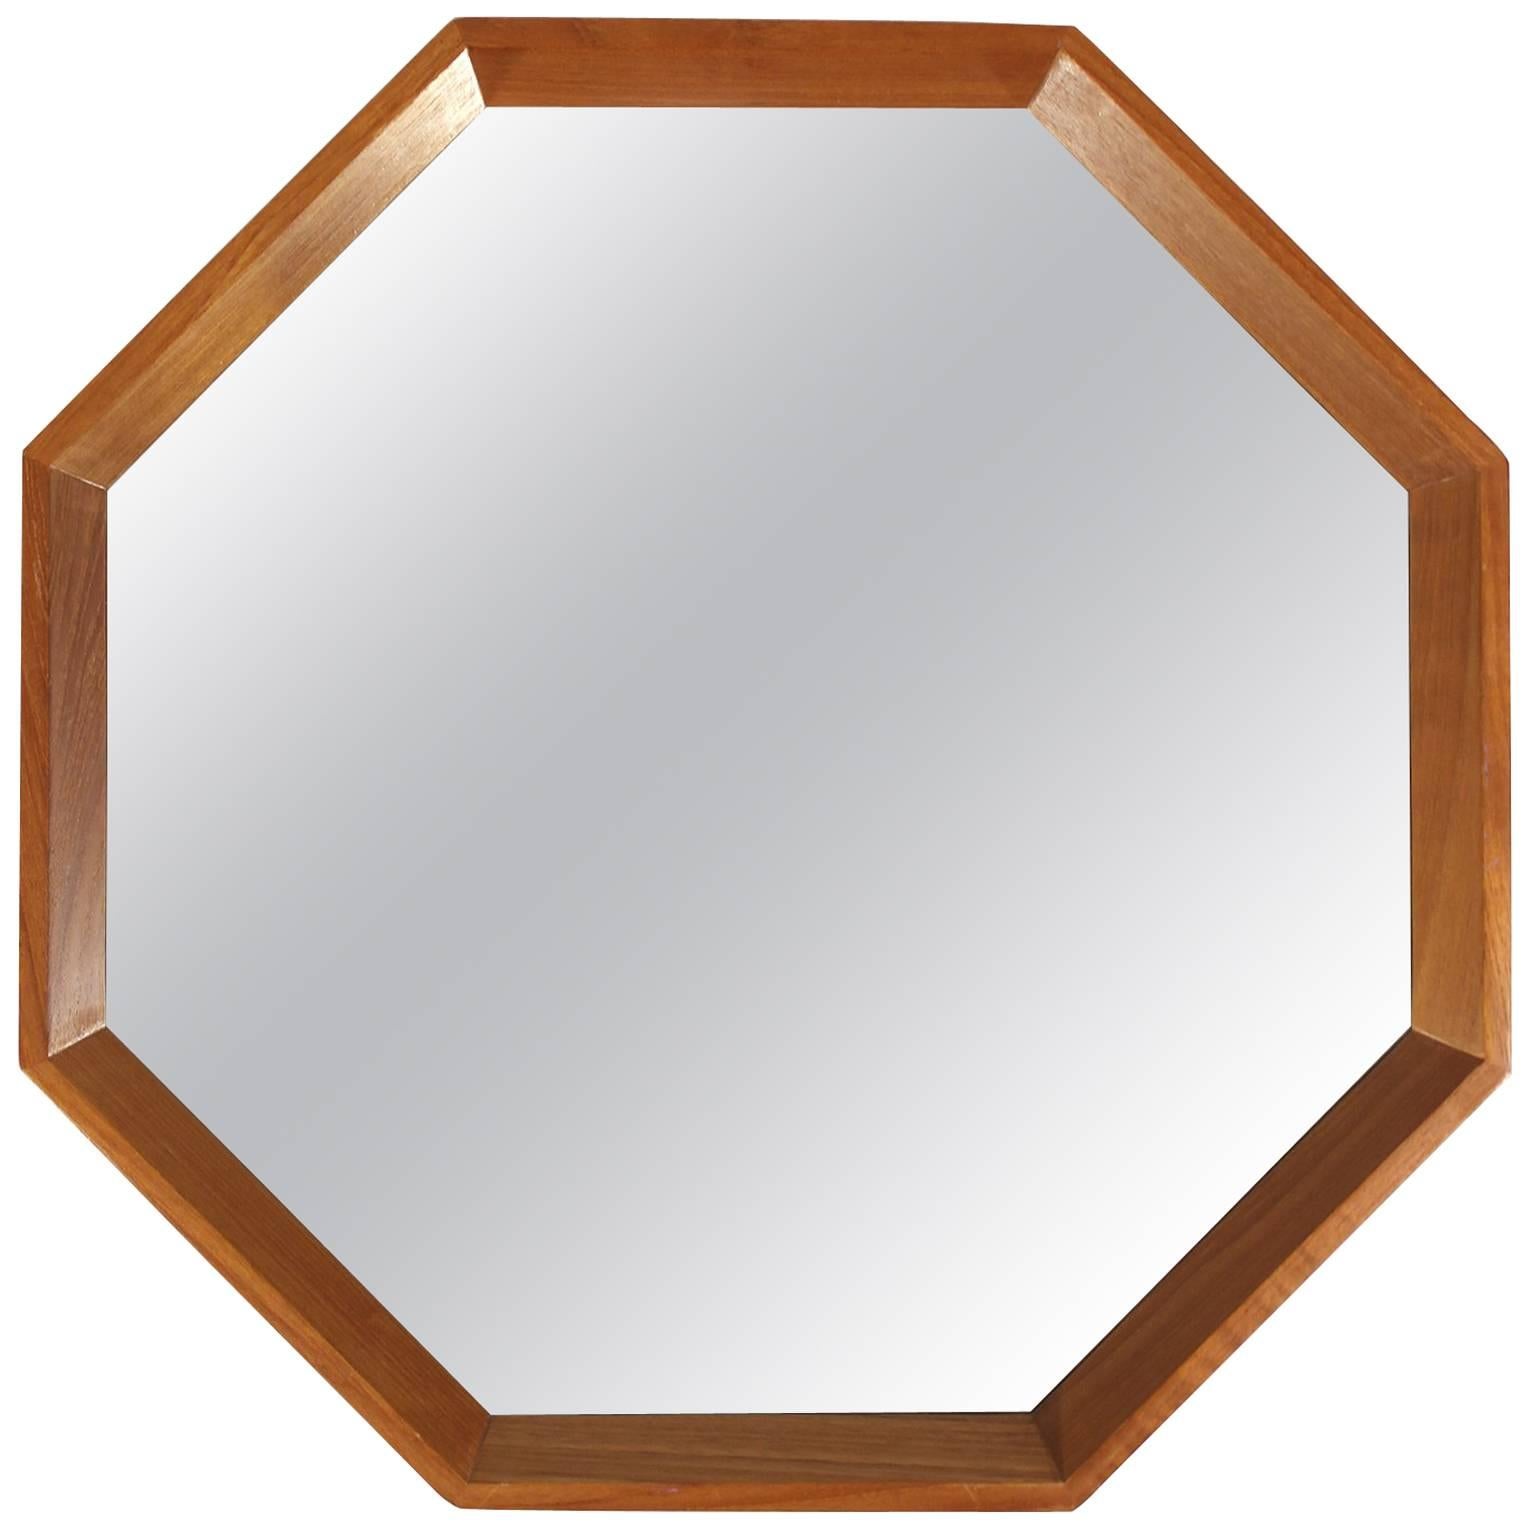 Modernist Danish Teak Octagon Mirror by M.M. Spejle